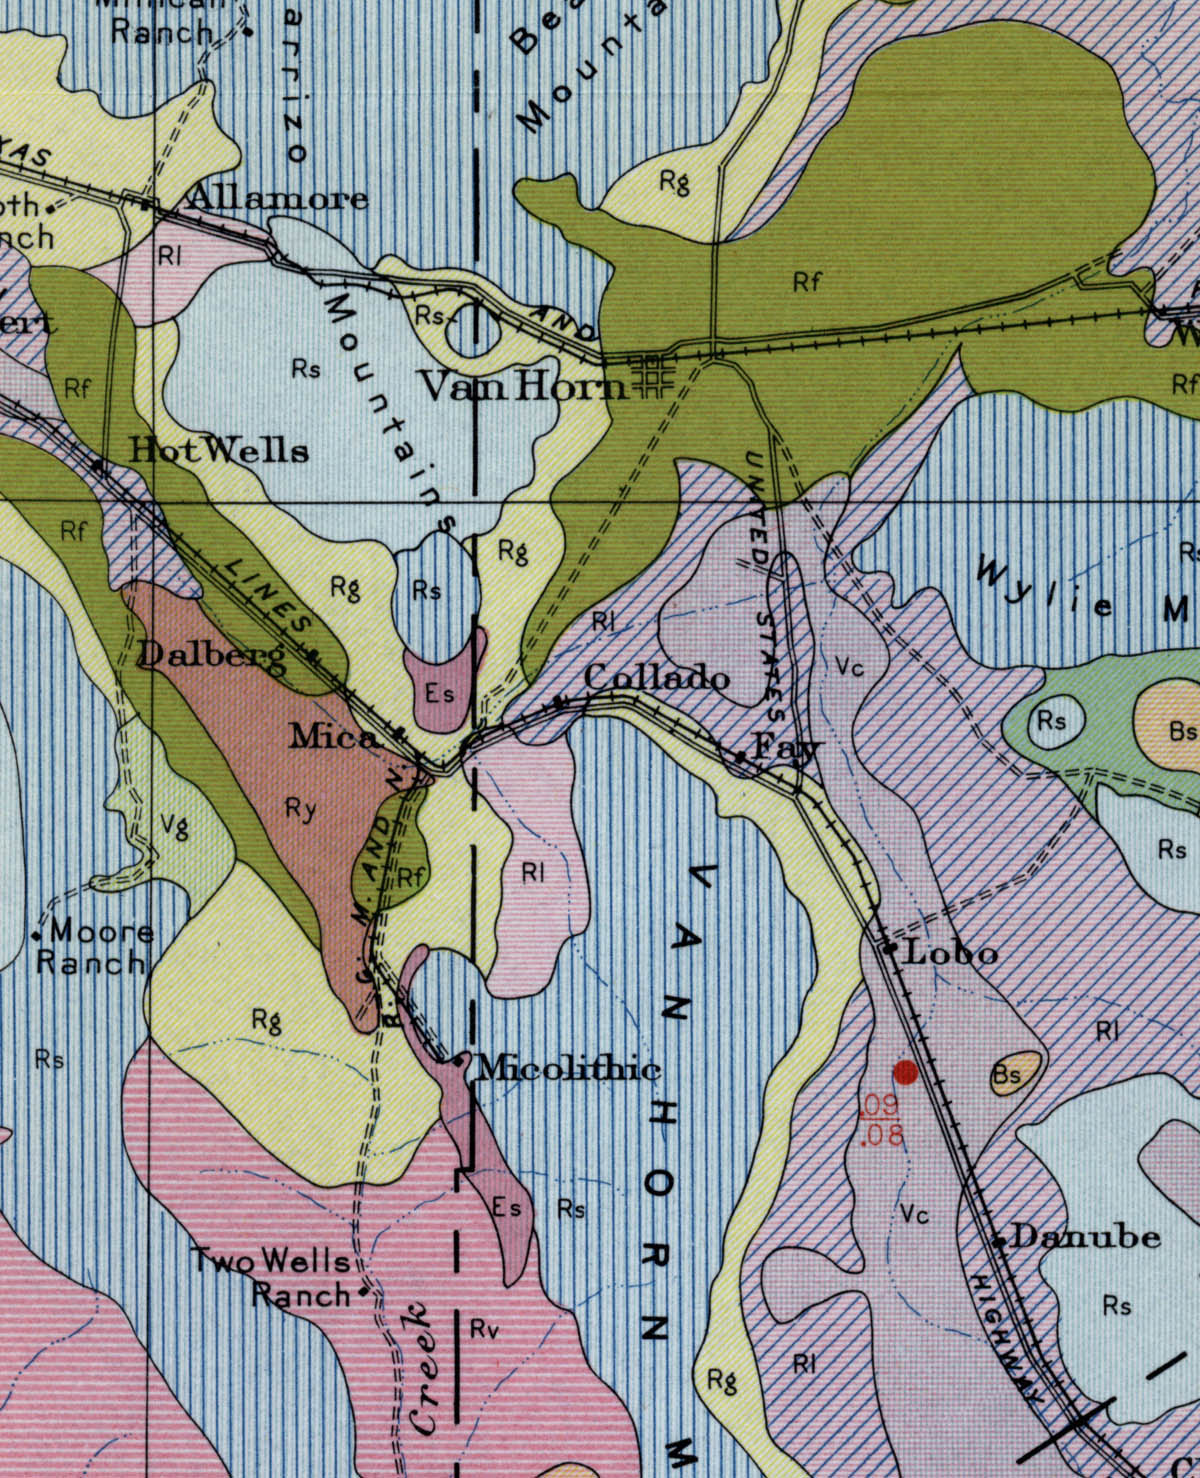 Rio Grande, Micolithic & Northern Railroad Company (Tex.), Map Showing Route in 1928.